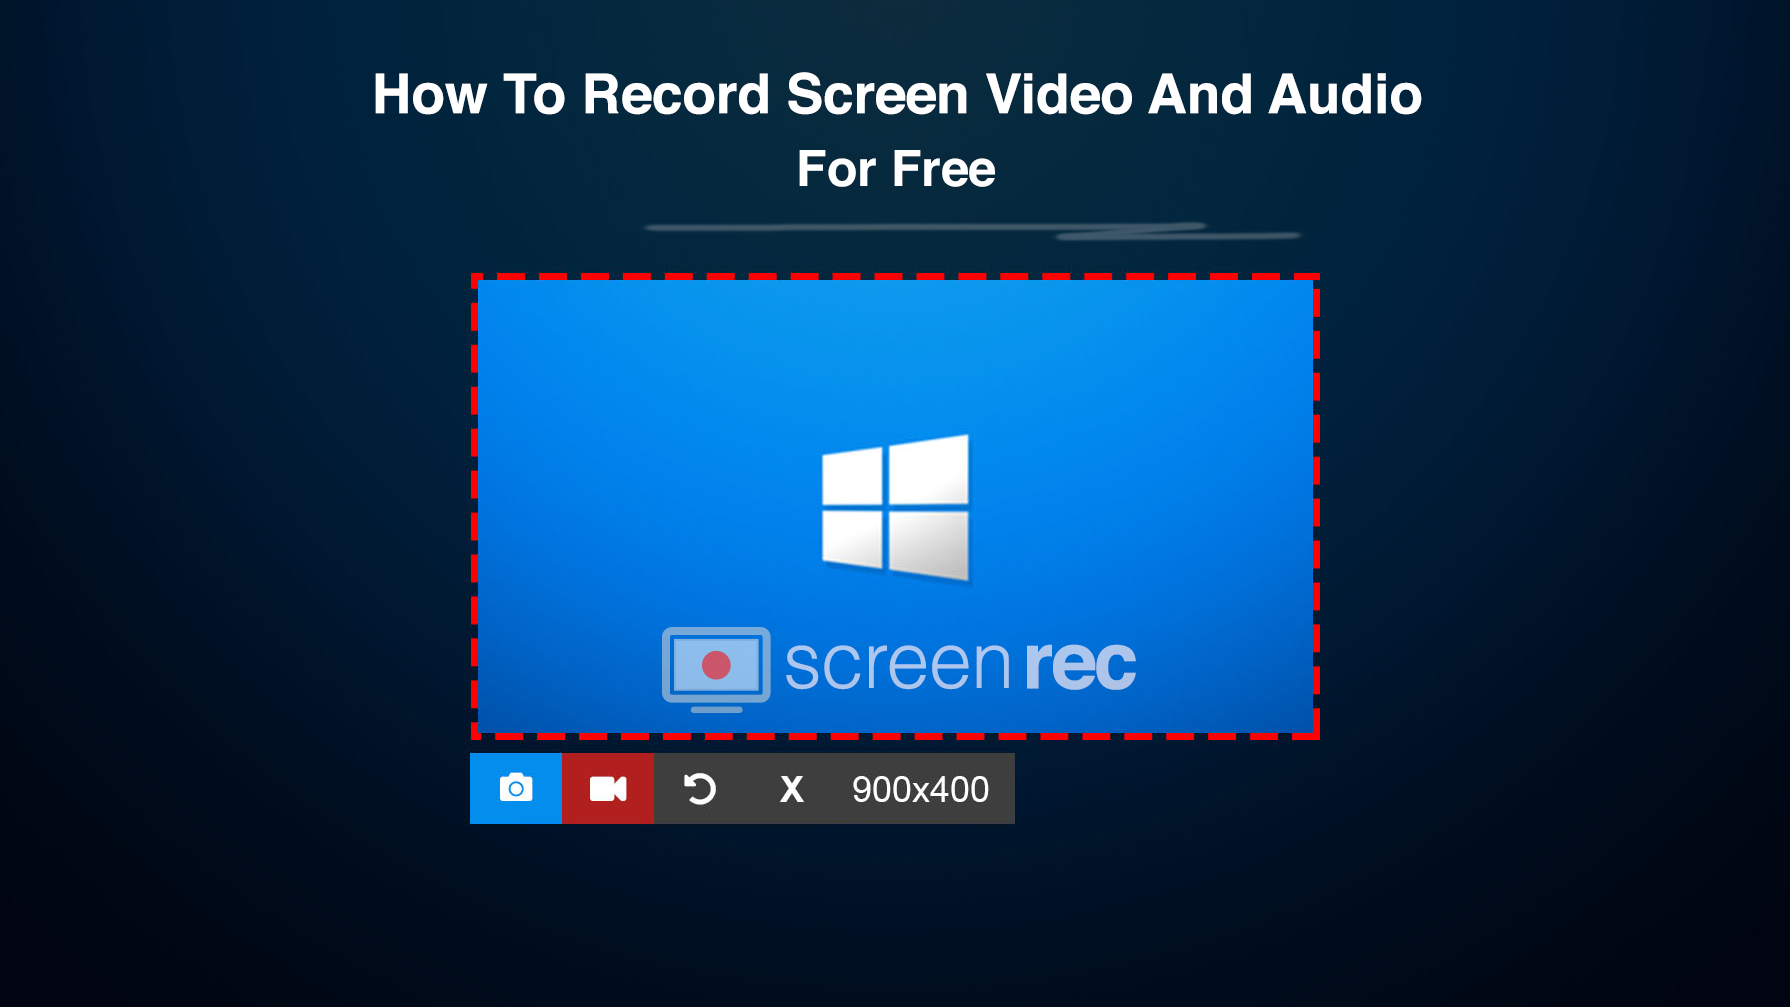 screen recorder windows 10 free download 64bit